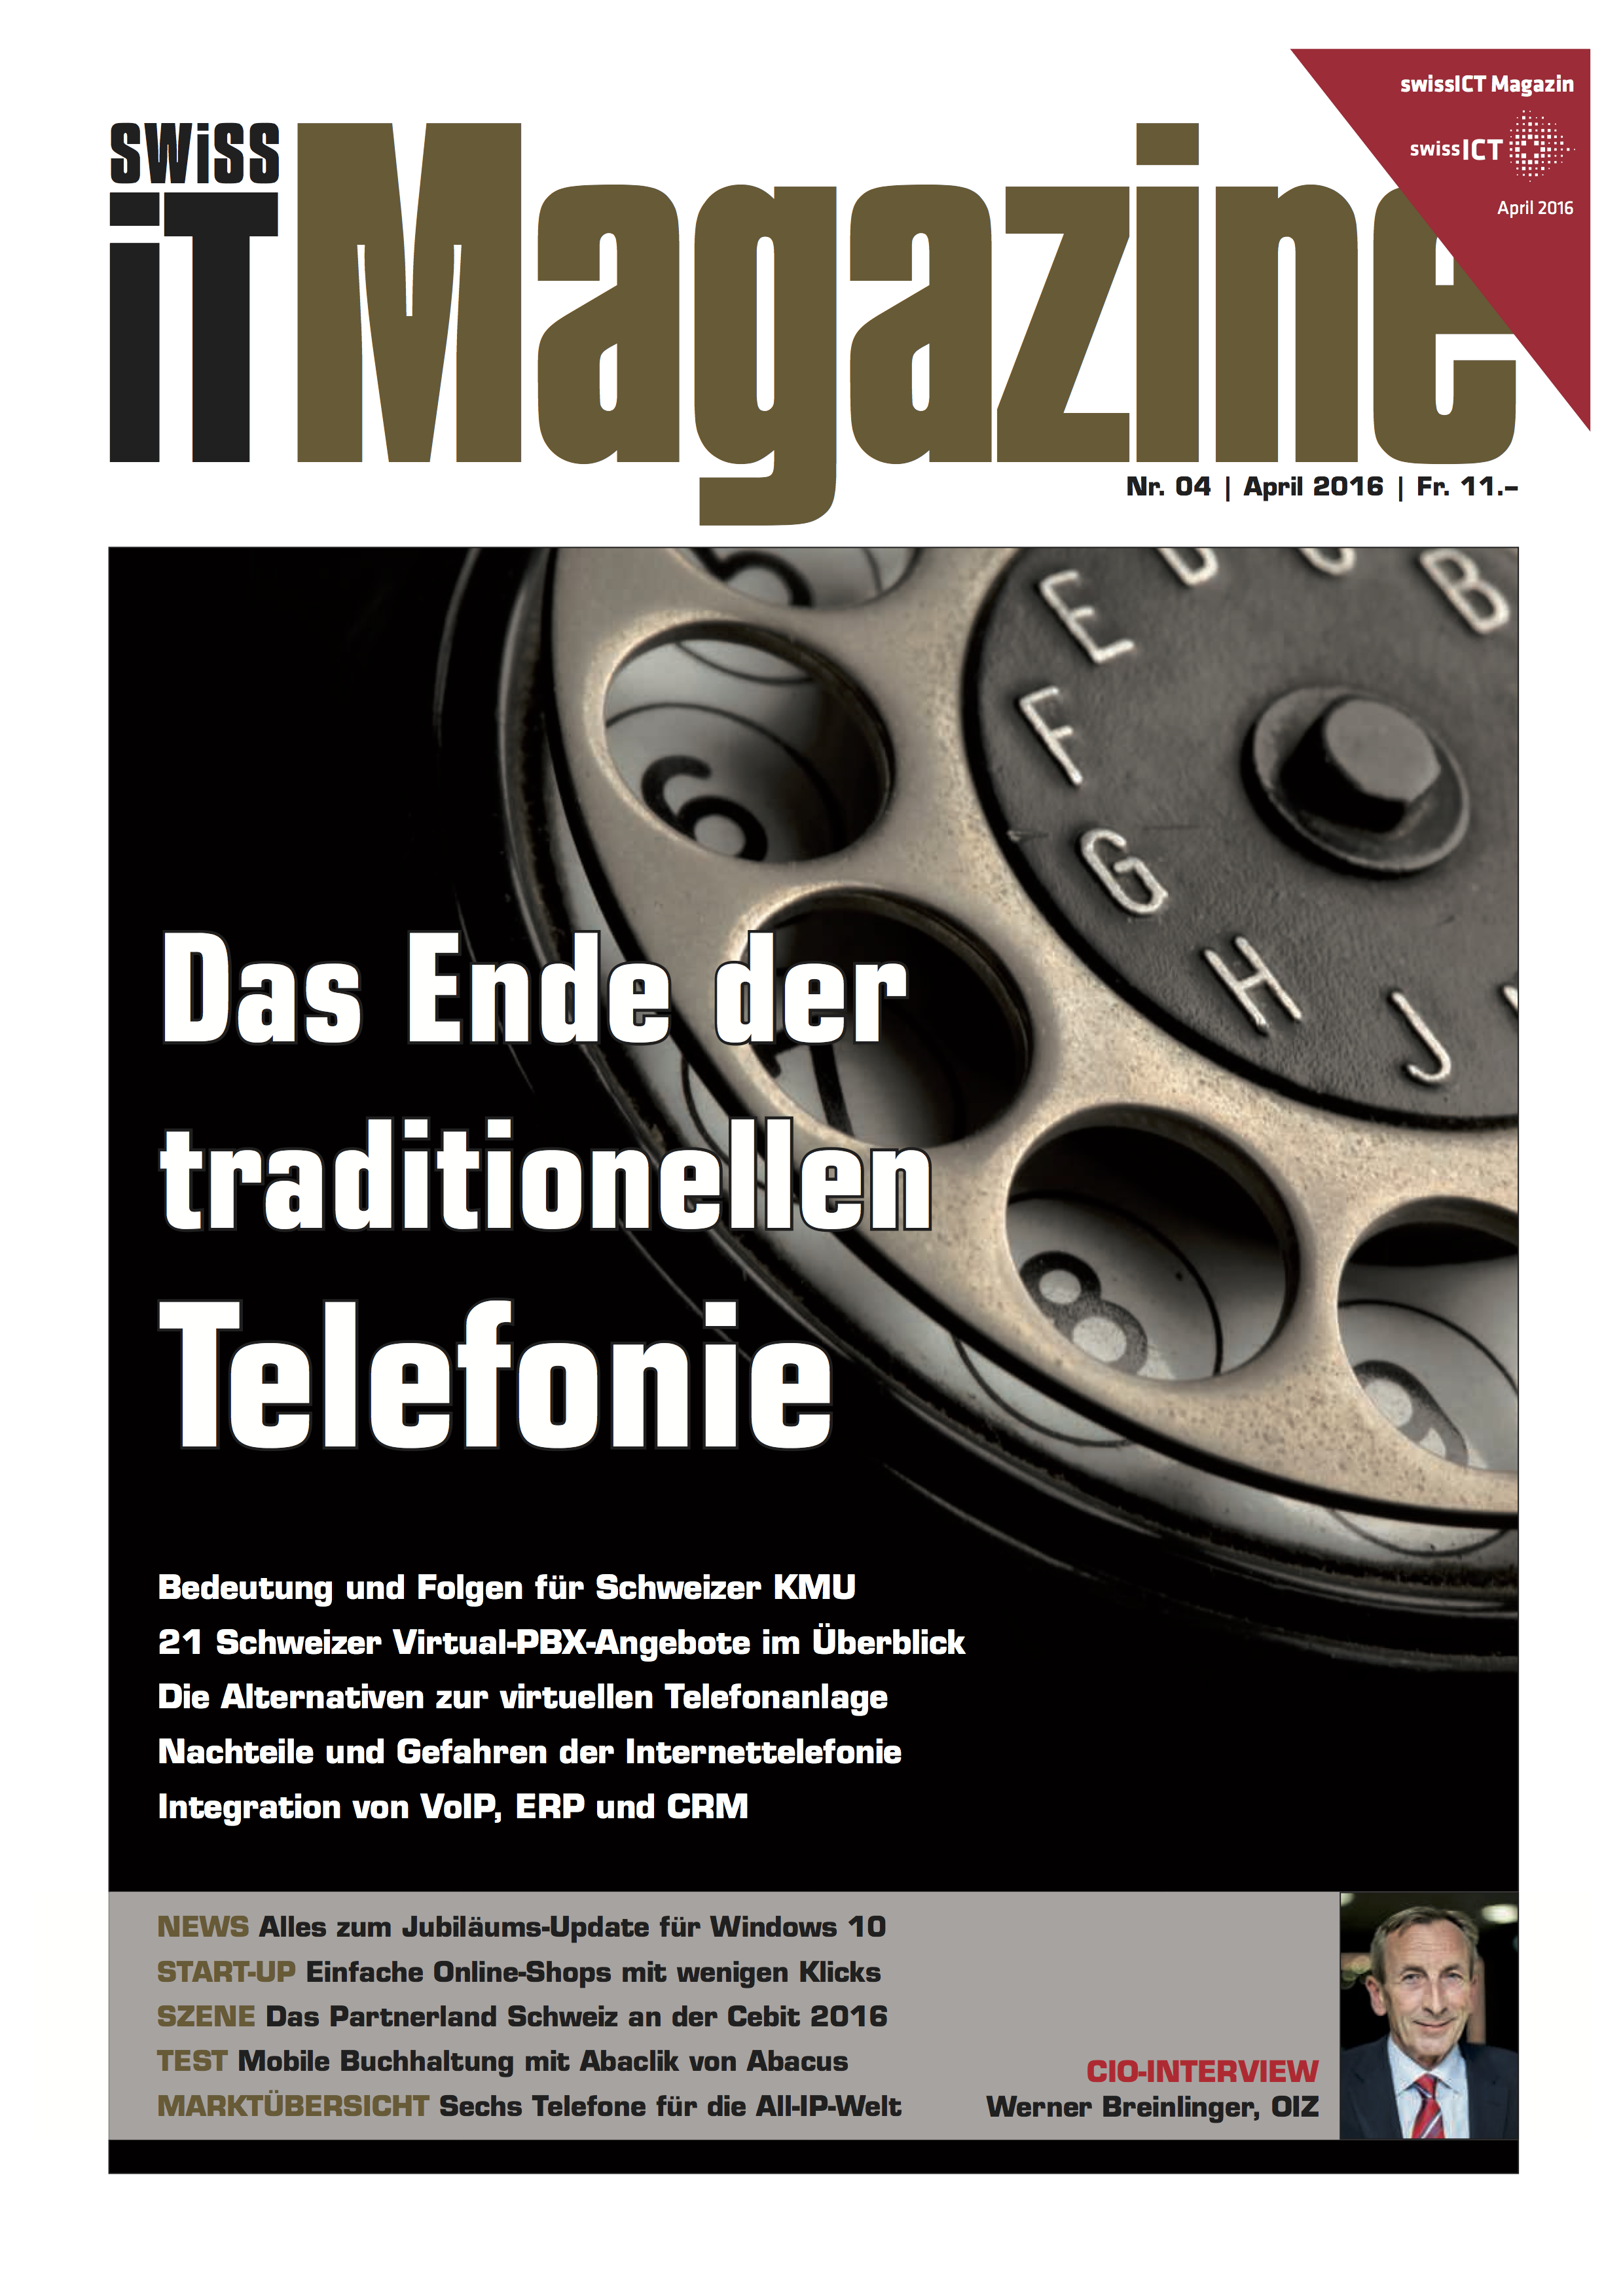 Swiss IT Magazine VoIP April